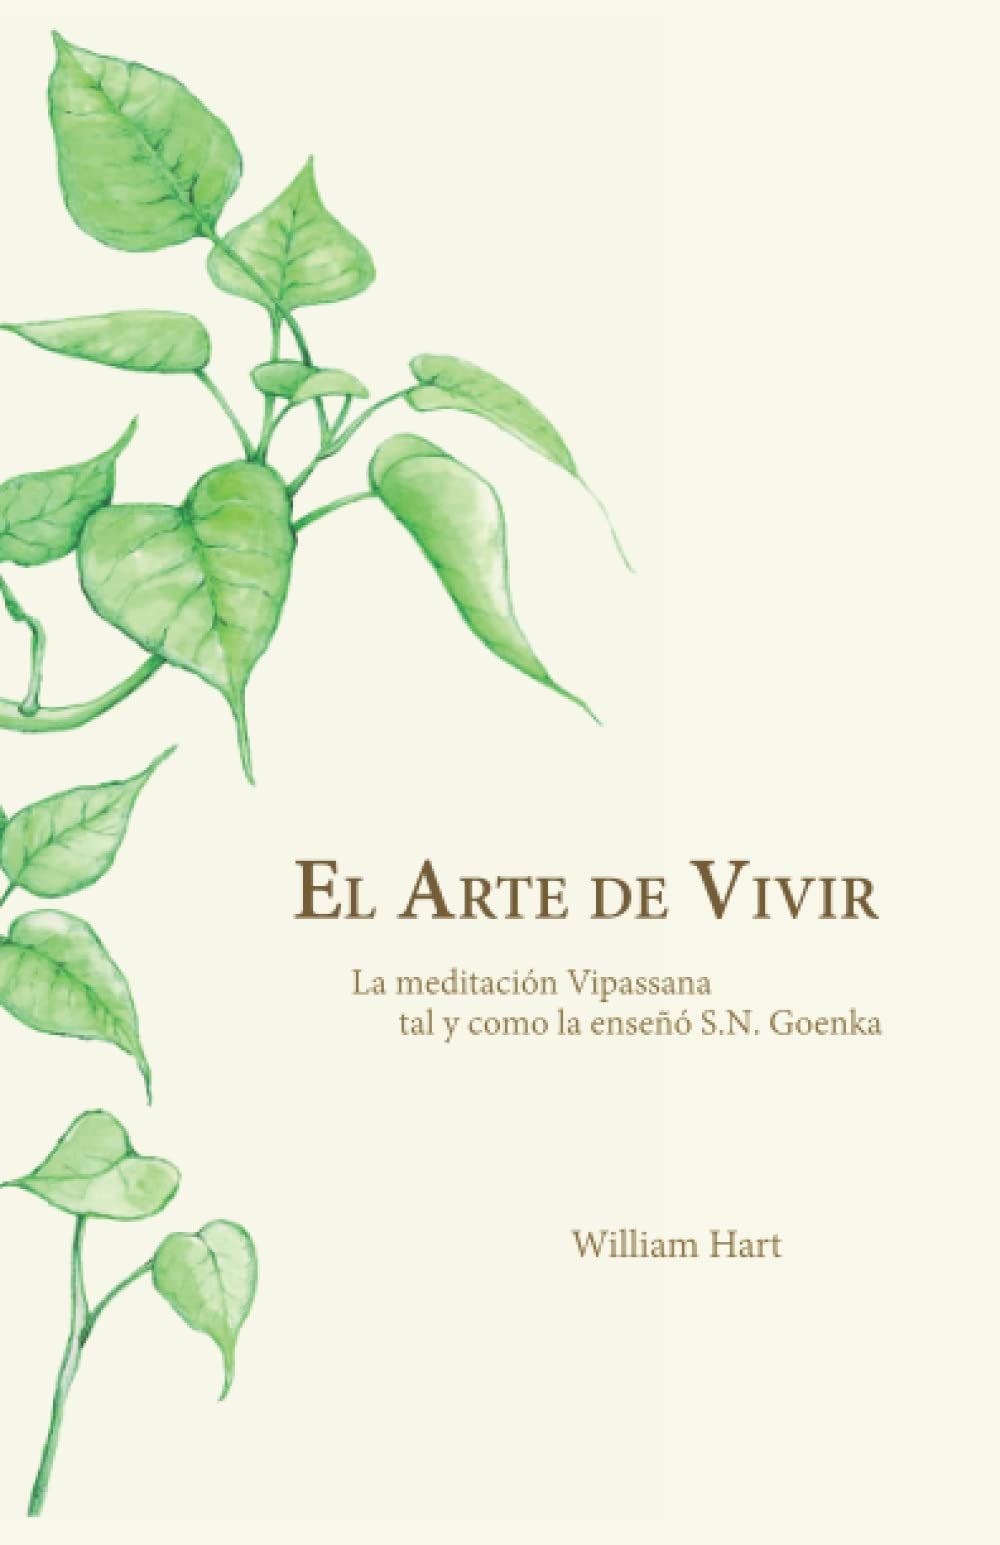 The Art of Living: Vipassana Meditation by William Hart